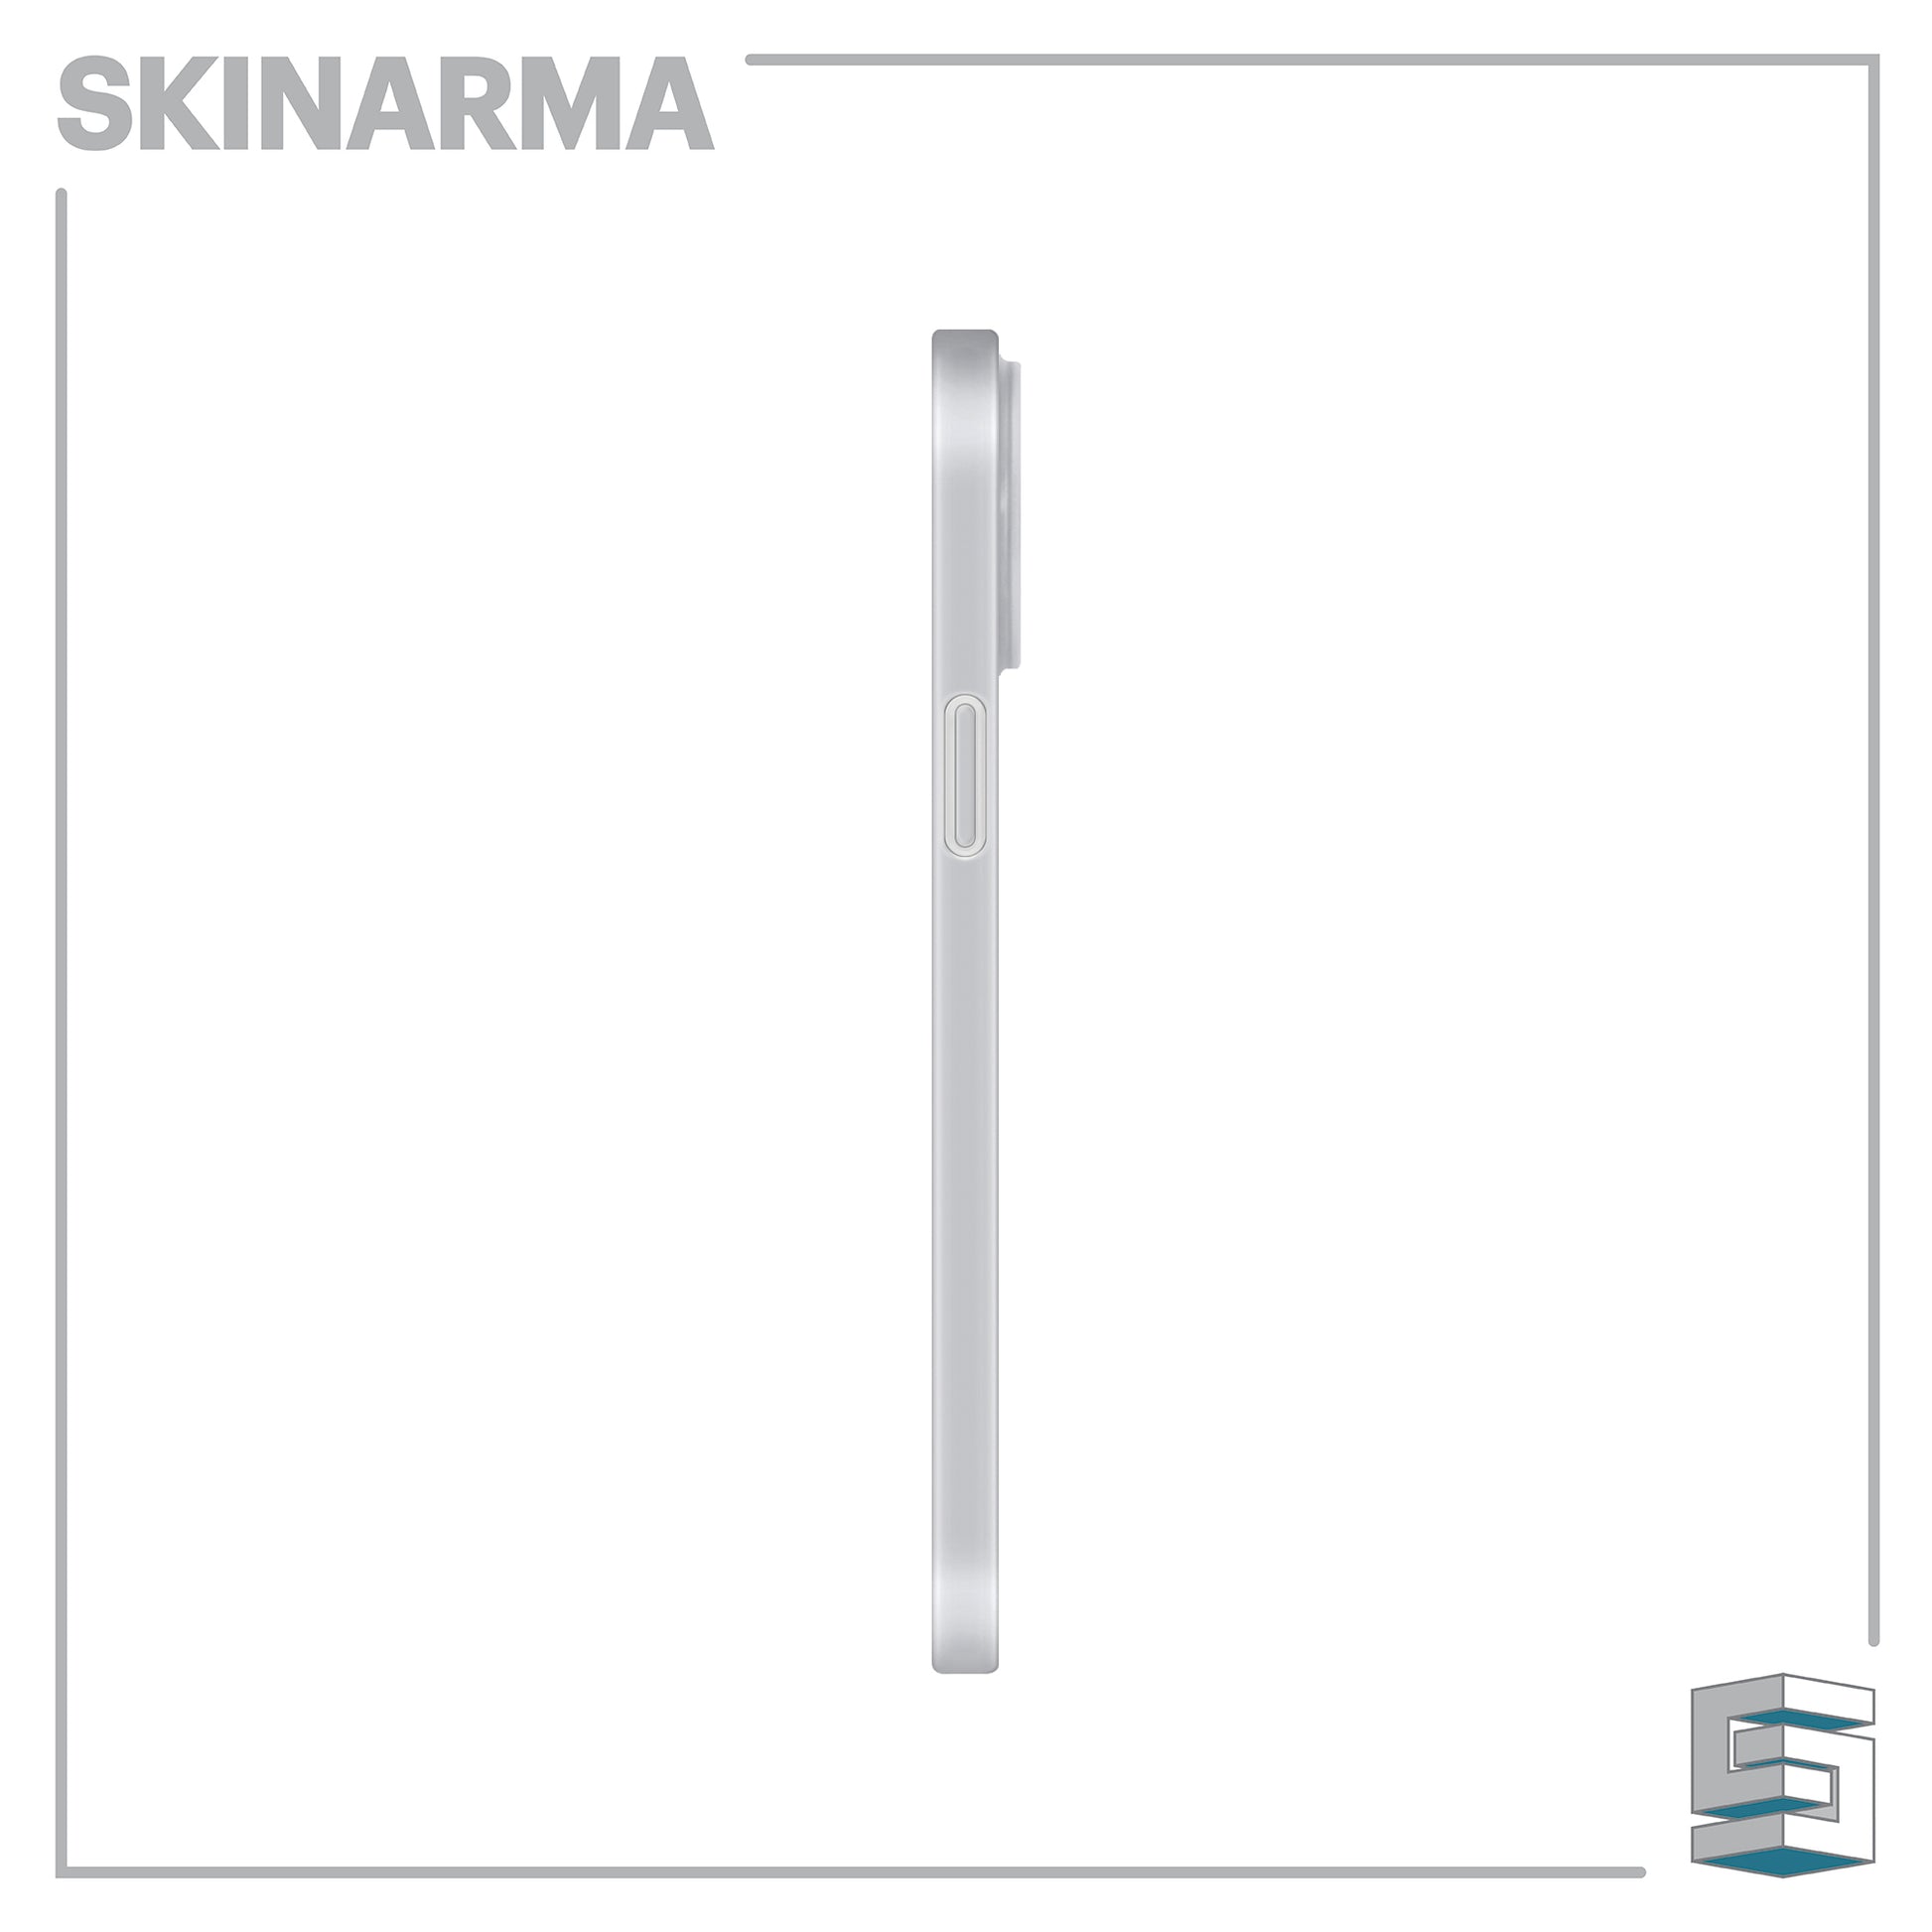 Case for Apple iPhone 13 series - SKINARMA Hadaka Tsuika Global Synergy Concepts